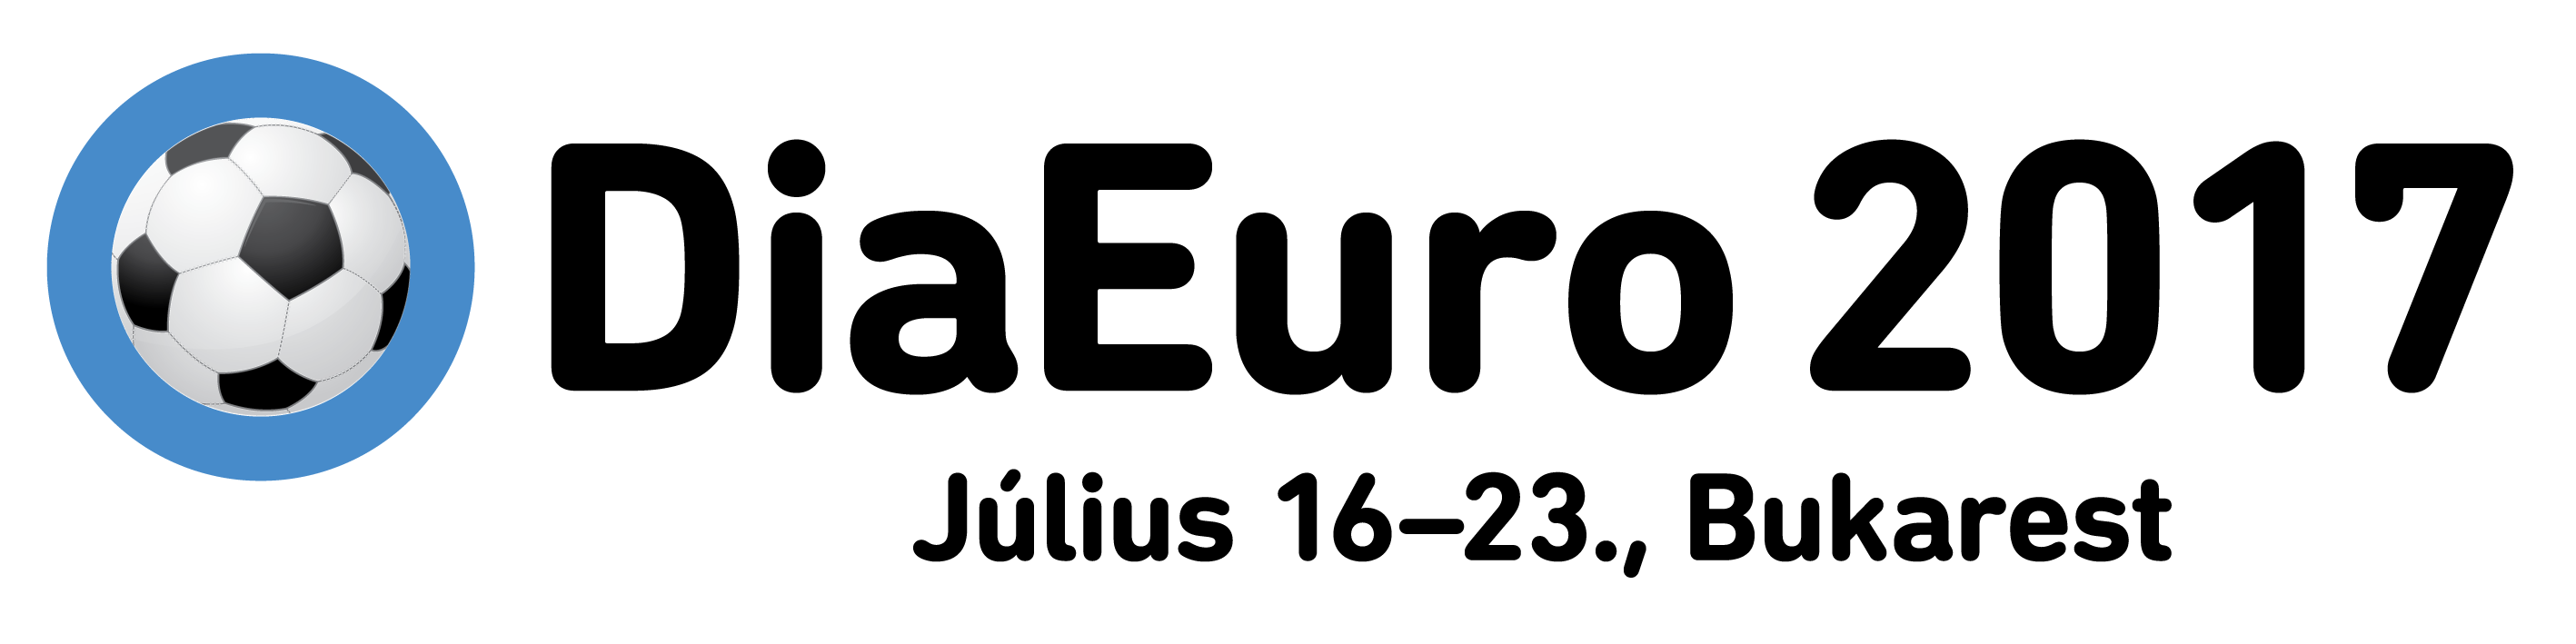 logo-diaeuro2017-datummal